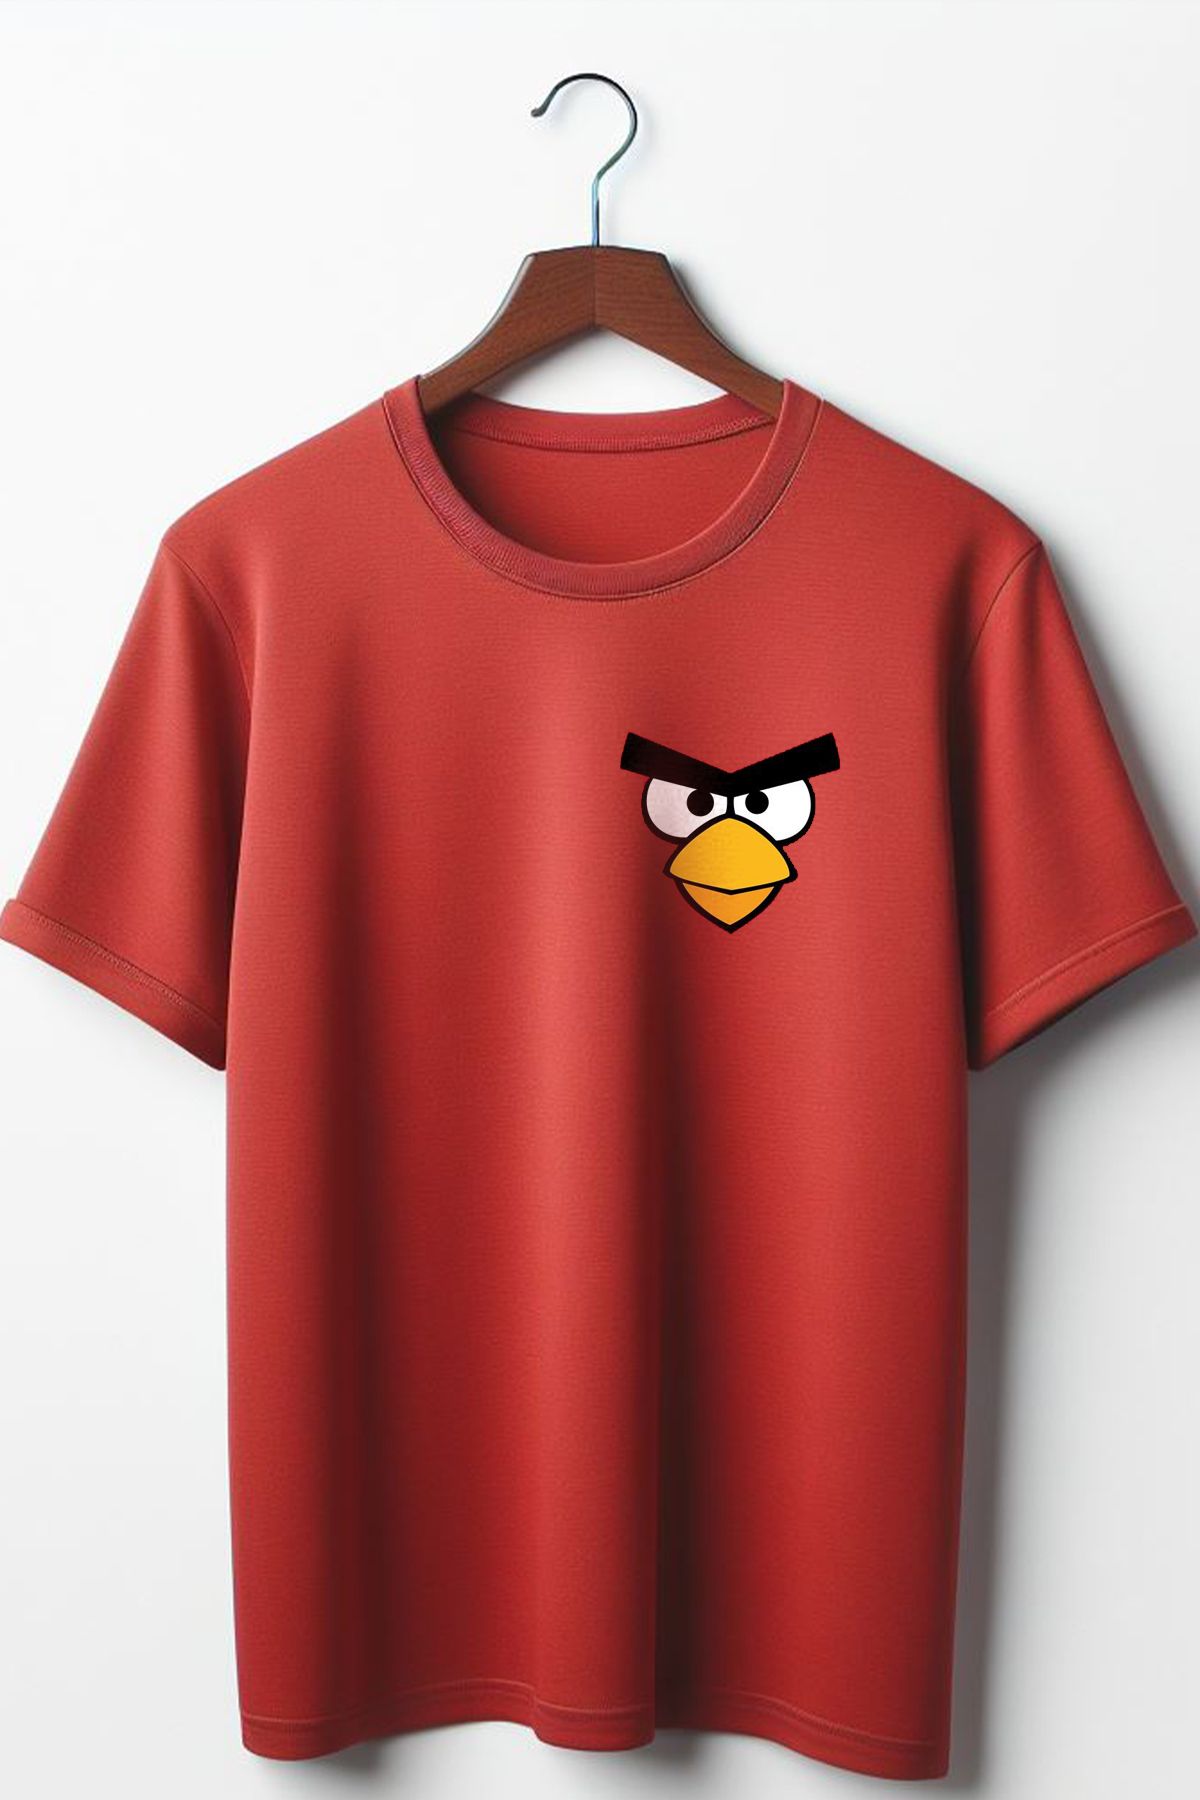 Vordevia Angry Birds Baskılı Kırmızı Oversize Bisiklet Yaka Tshirt